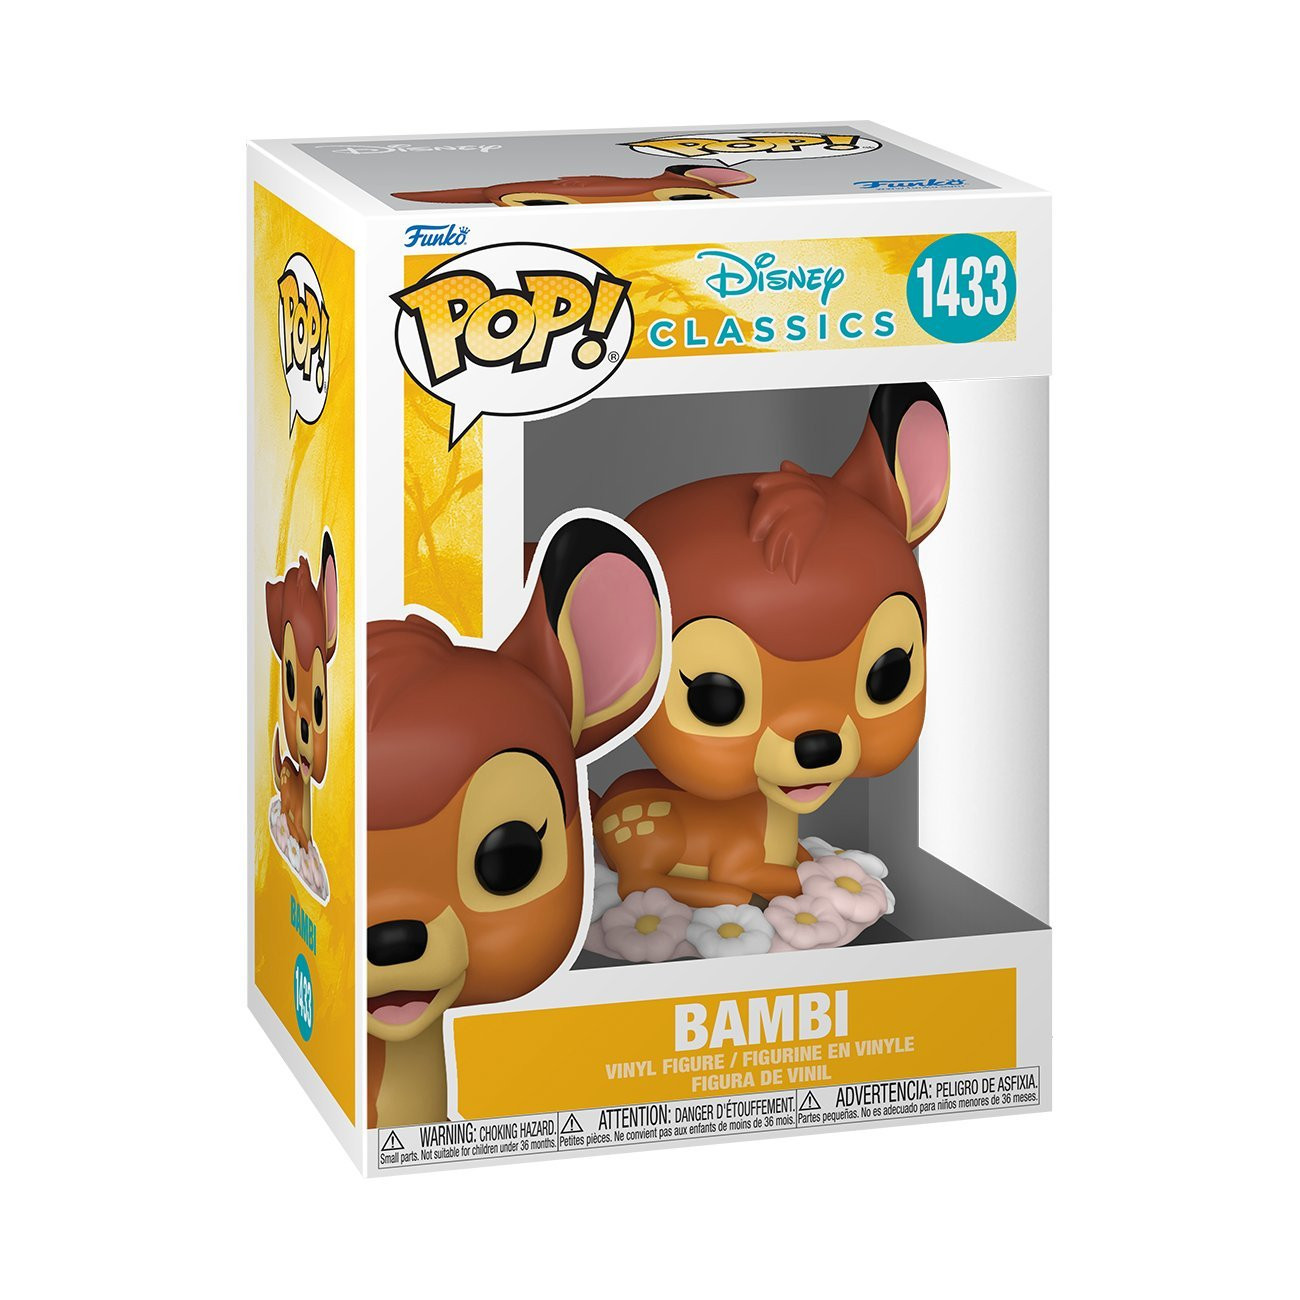 Figurka Funko POP! Disney - Bambi Classics (Disney 1433) - 0889698656641